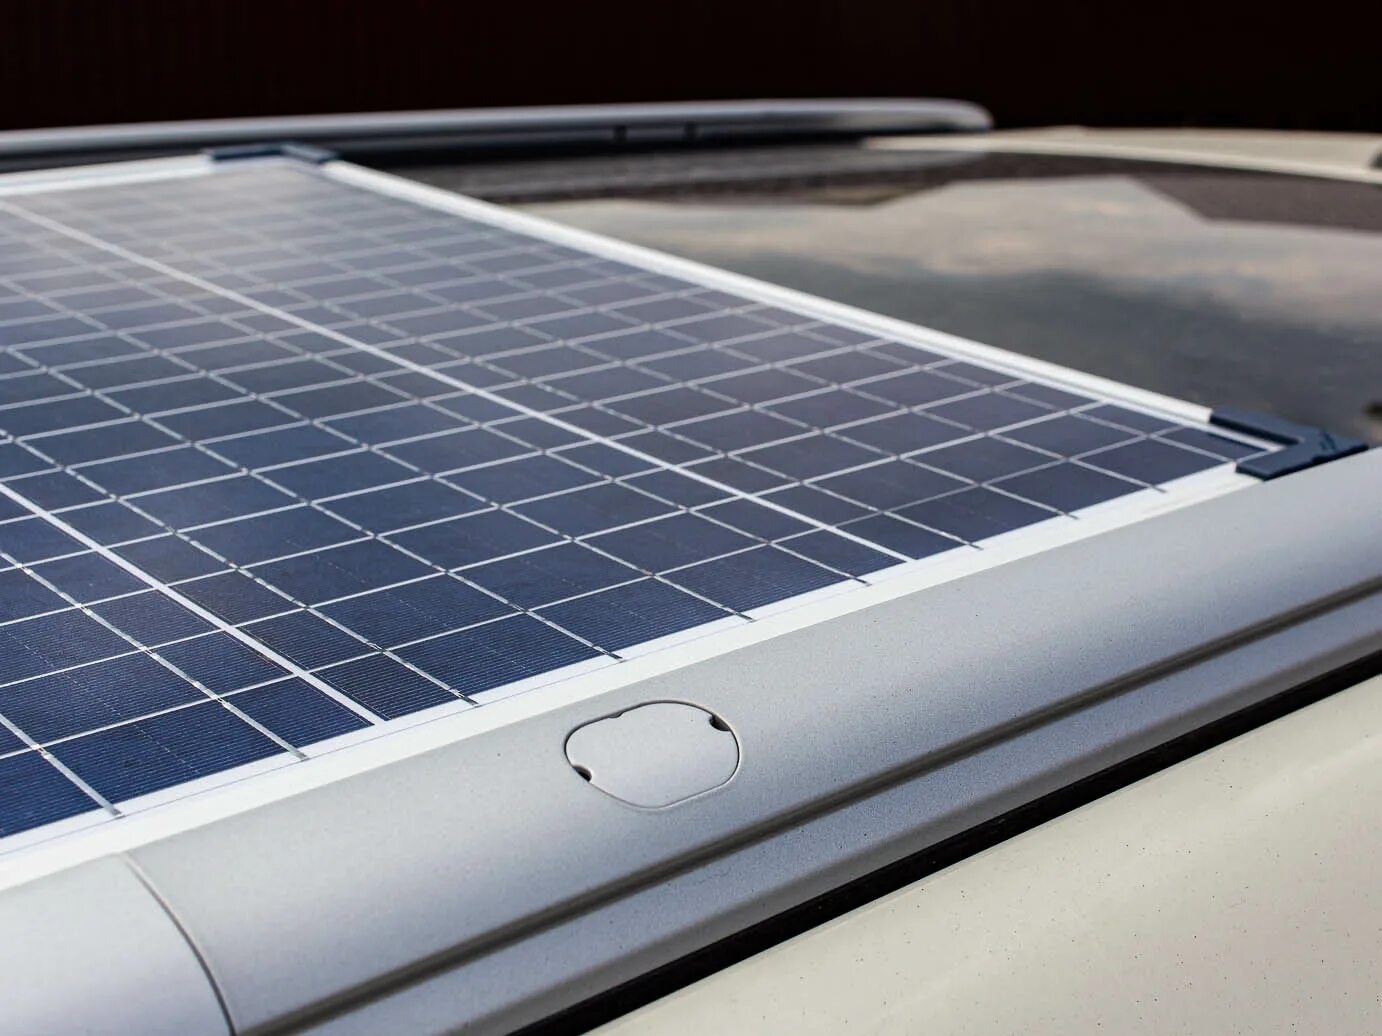 Солнечная панель 80вт. Автомобильная зарядка на солнечных батареях. Солнечная батарея для зарядки автомобильного аккумулятора. Солнечная панель для зарядки аккумулятора автомобиля.